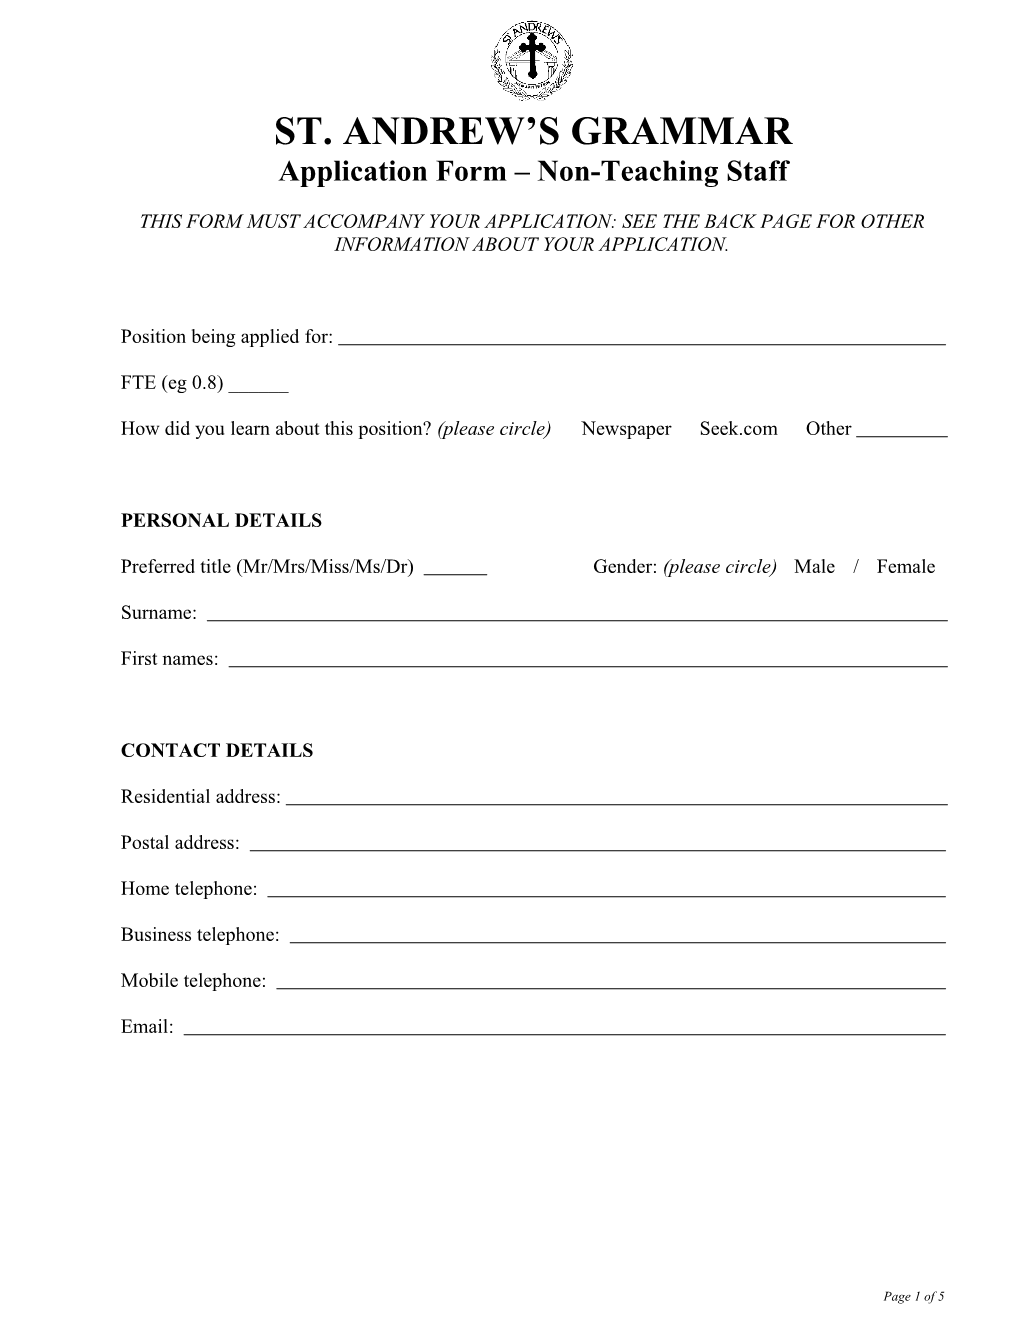 Application Form Non-Teaching Staff